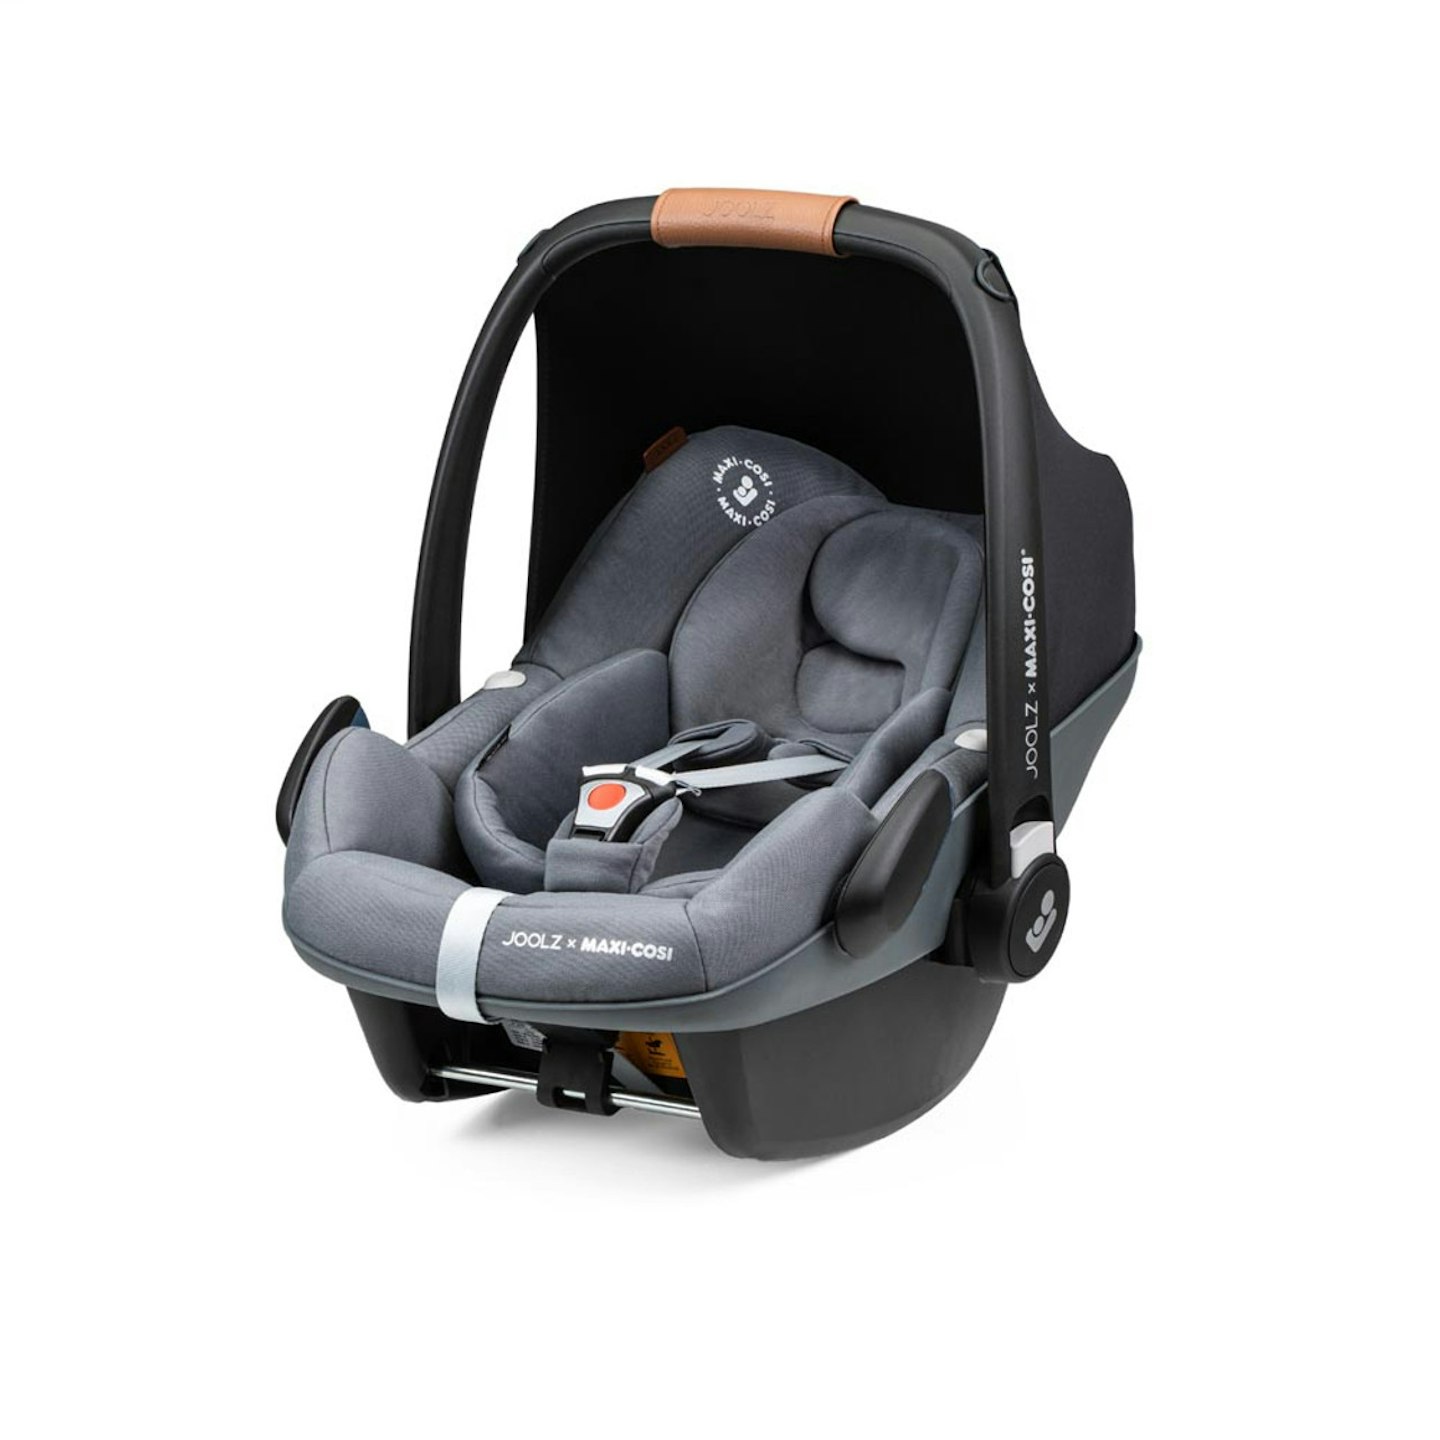 Joolz baby car seat